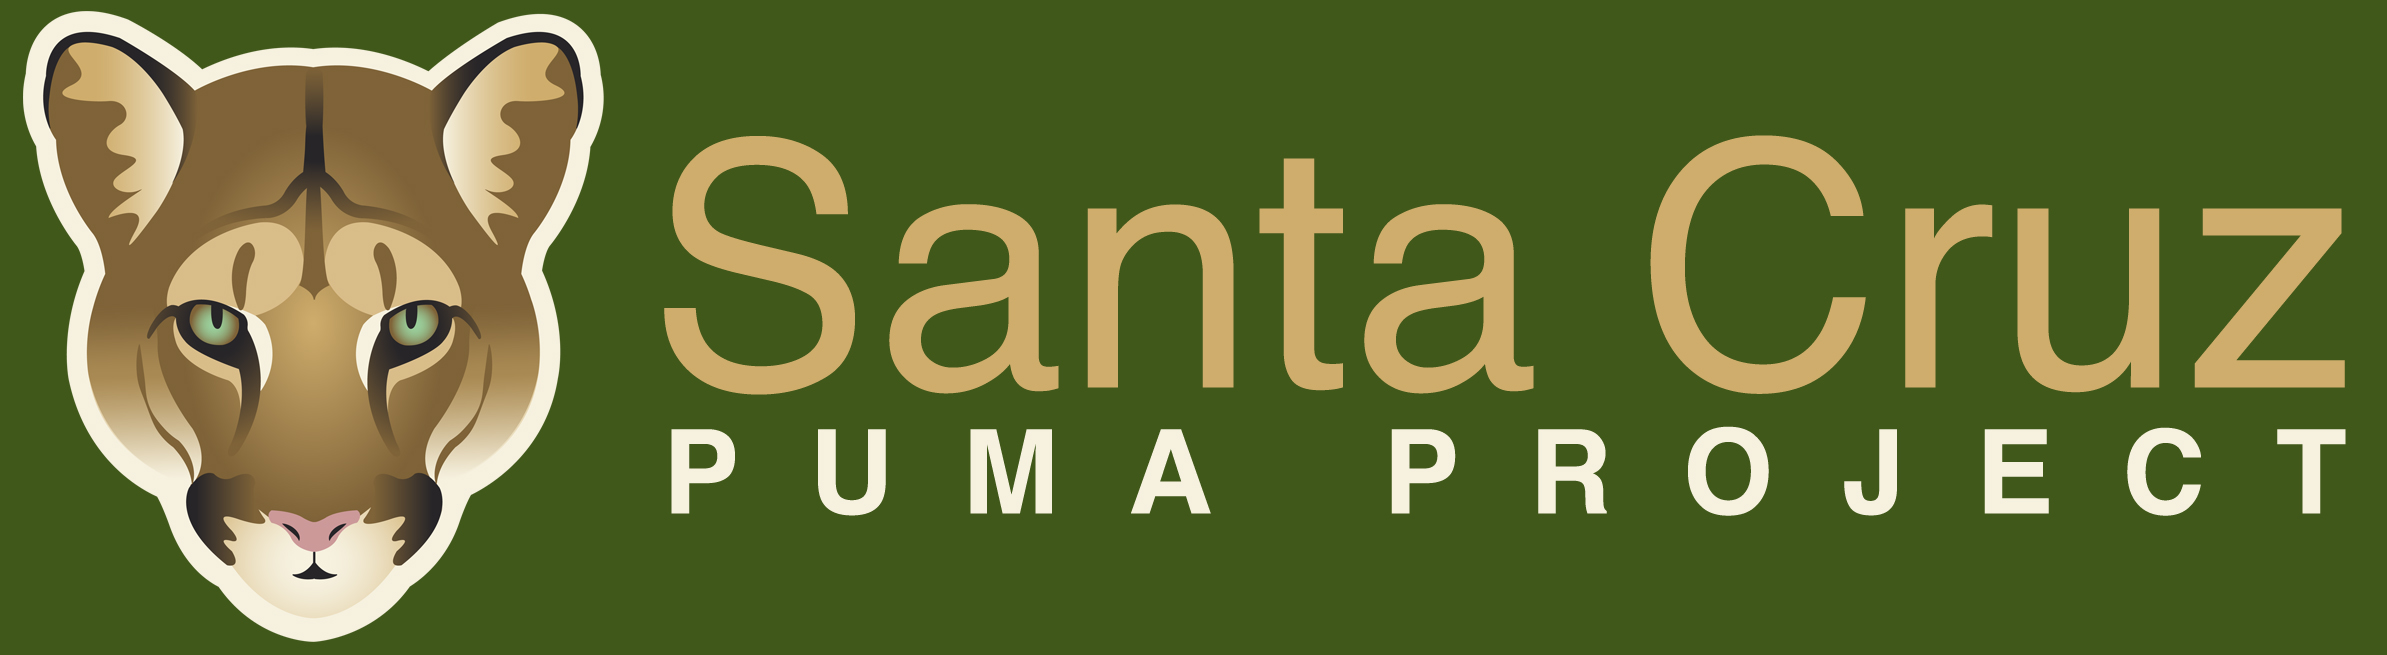 header-puma-logo.jpg